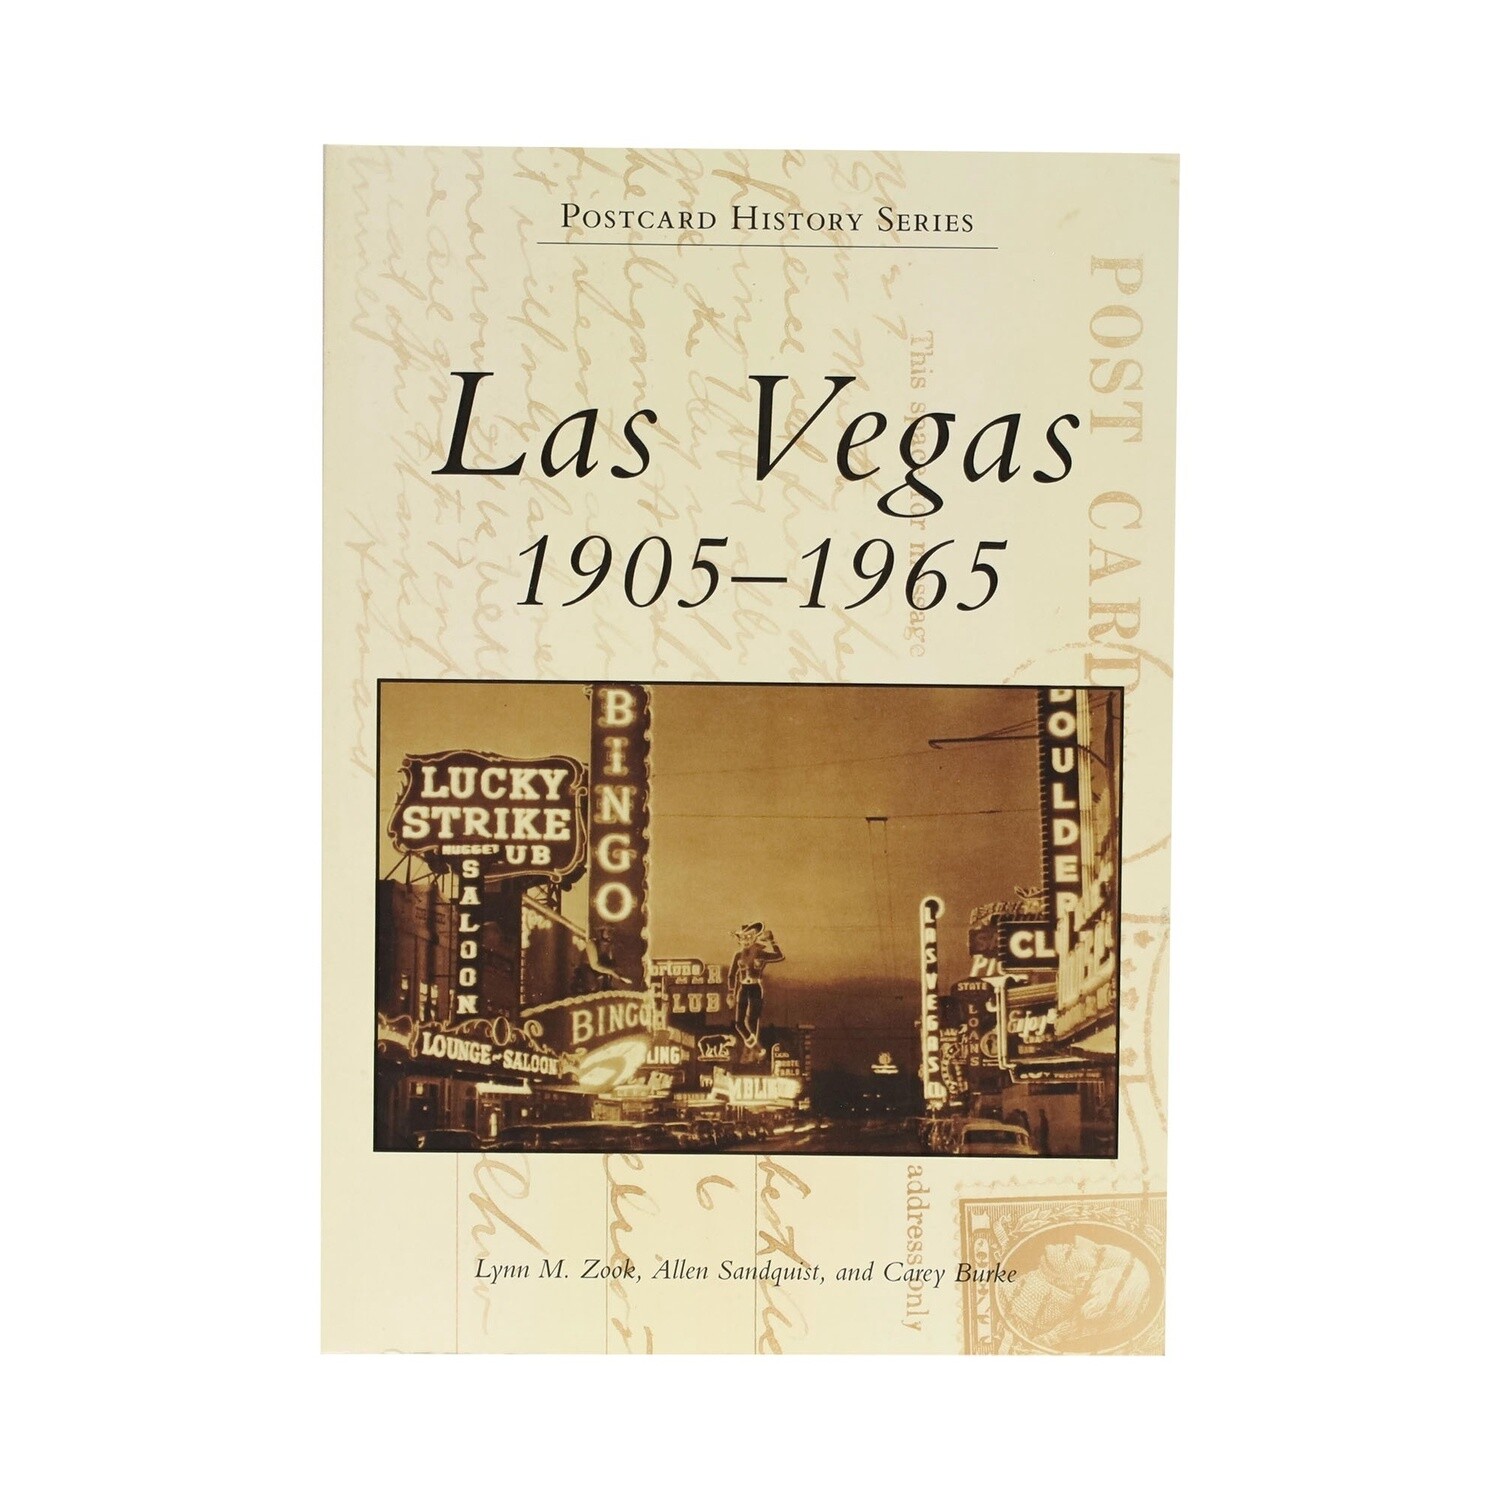 Postcard History Series: Las Vegas 1905-1965 by Lynn M. Zook, Allen Sandquist, and Carey Burke